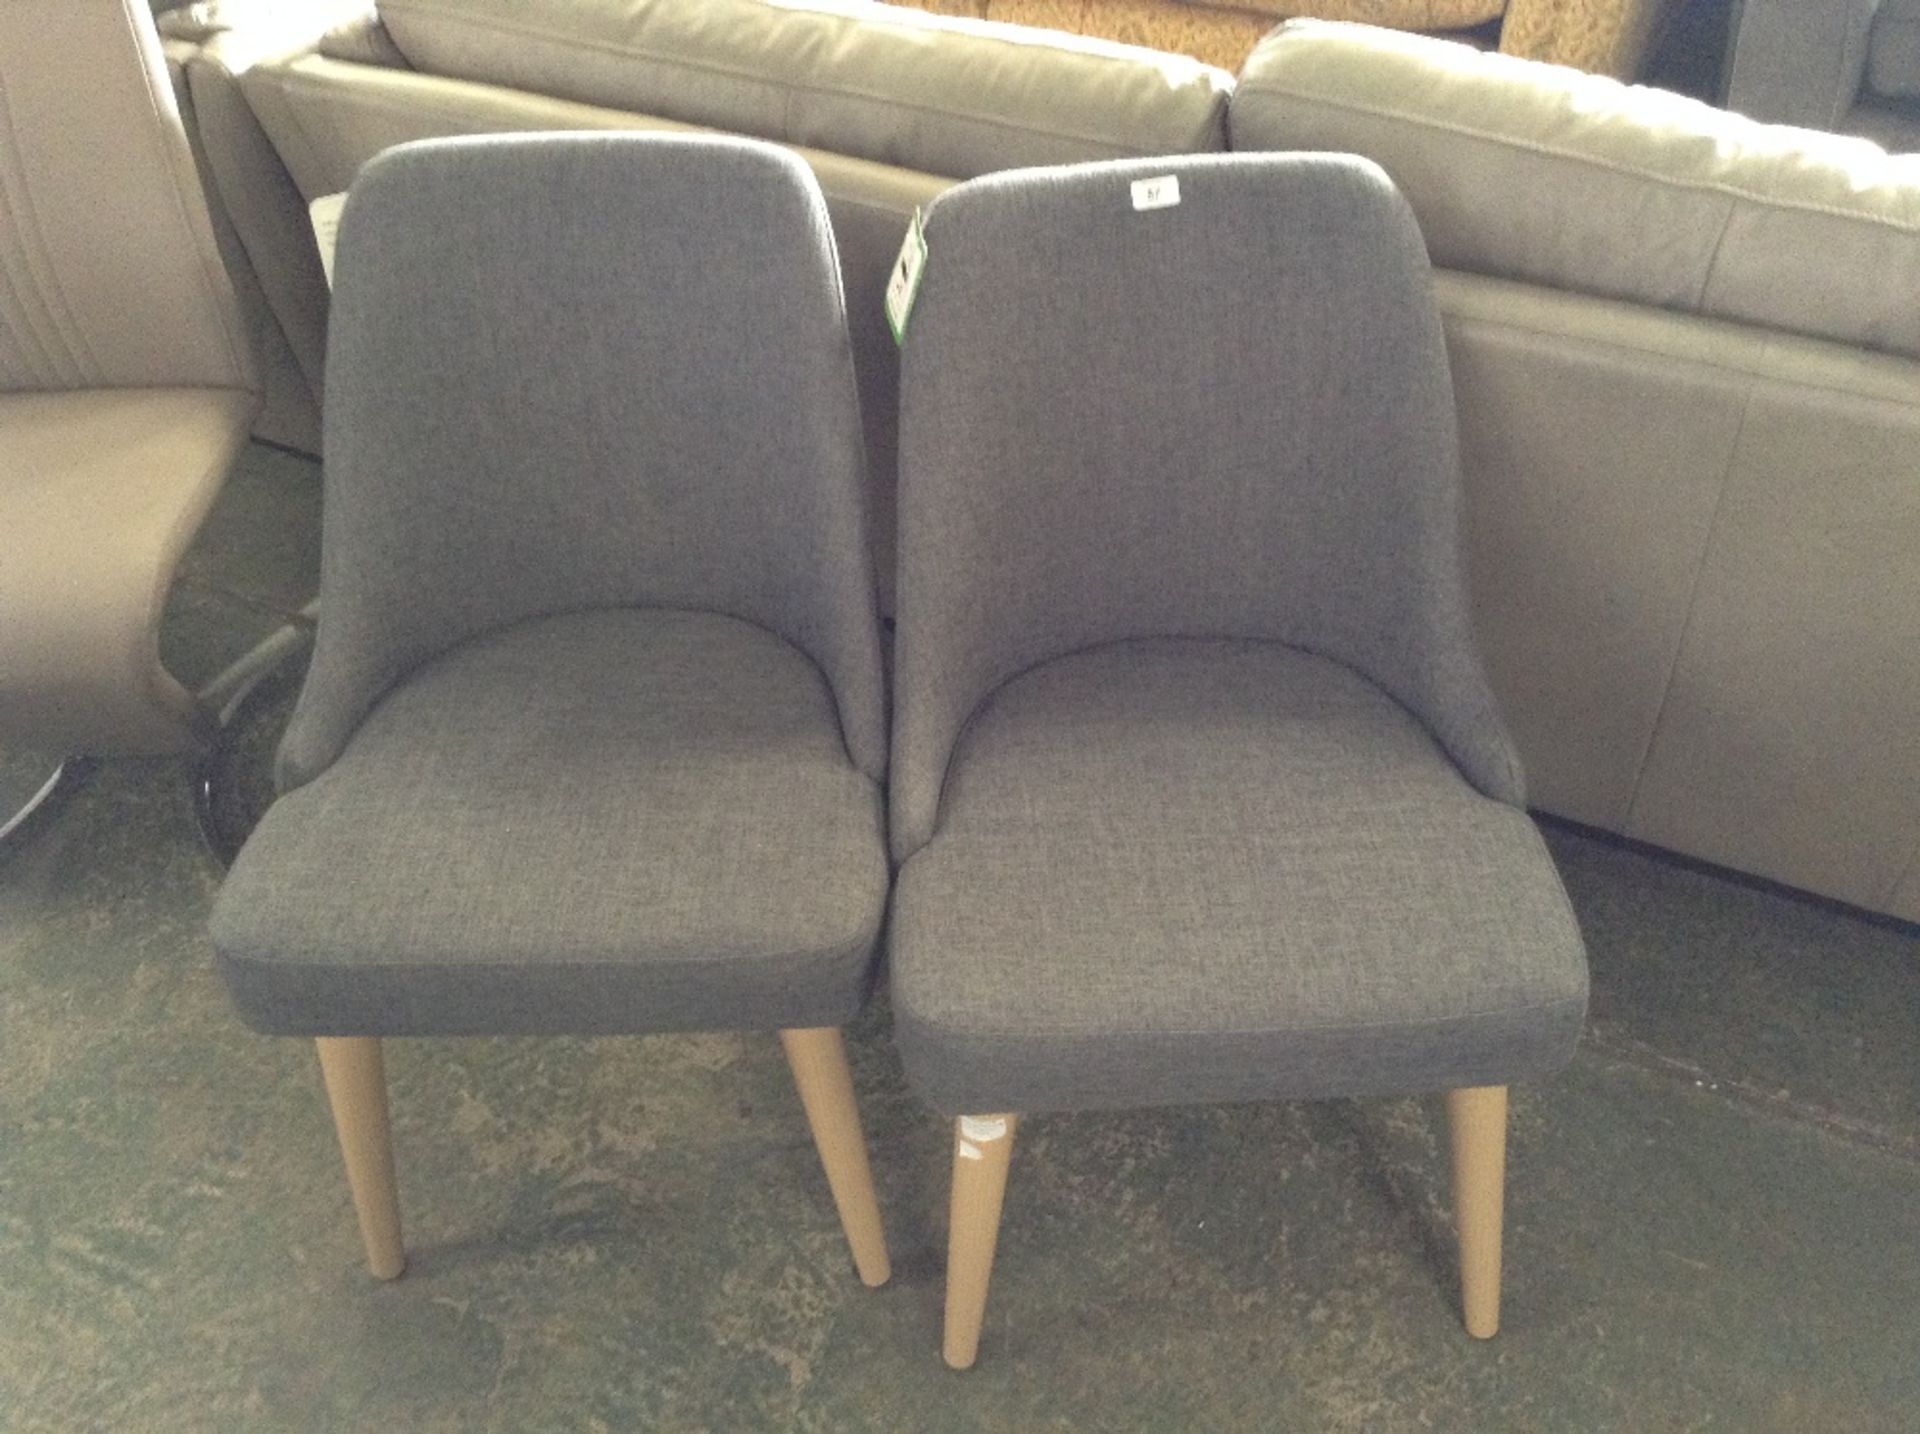 Corrigan Studio Deonte Upholstered Dining Chair x2 (CRTD1272 - 17262/9)